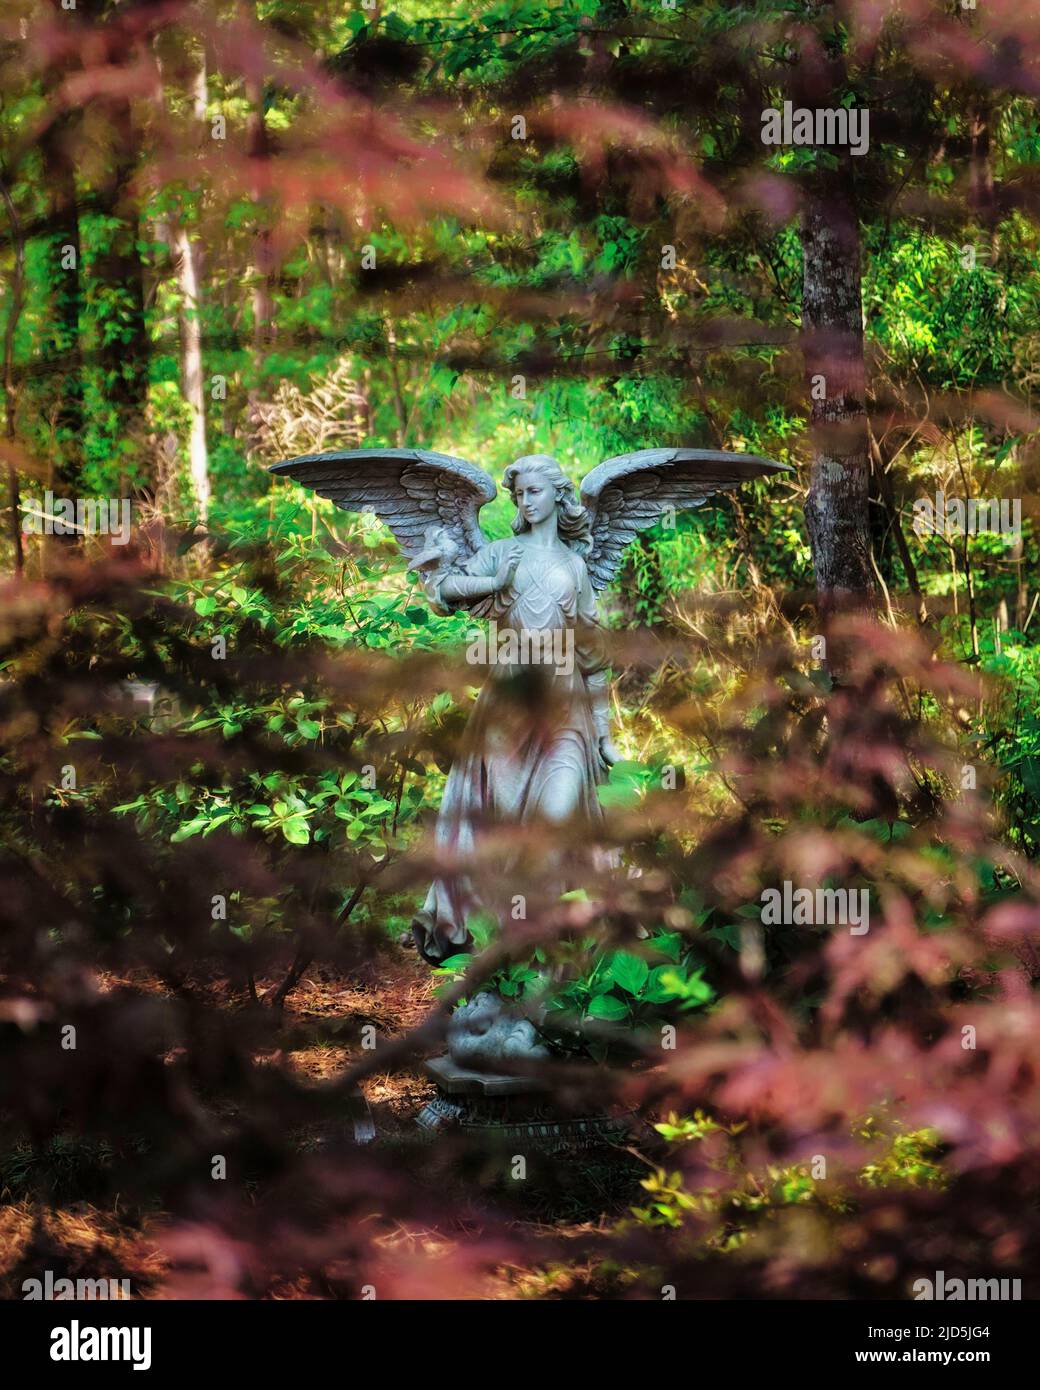 Garden angel statue or garden art in a home garden or English garden setting with Japanese maple trees. Stock Photo